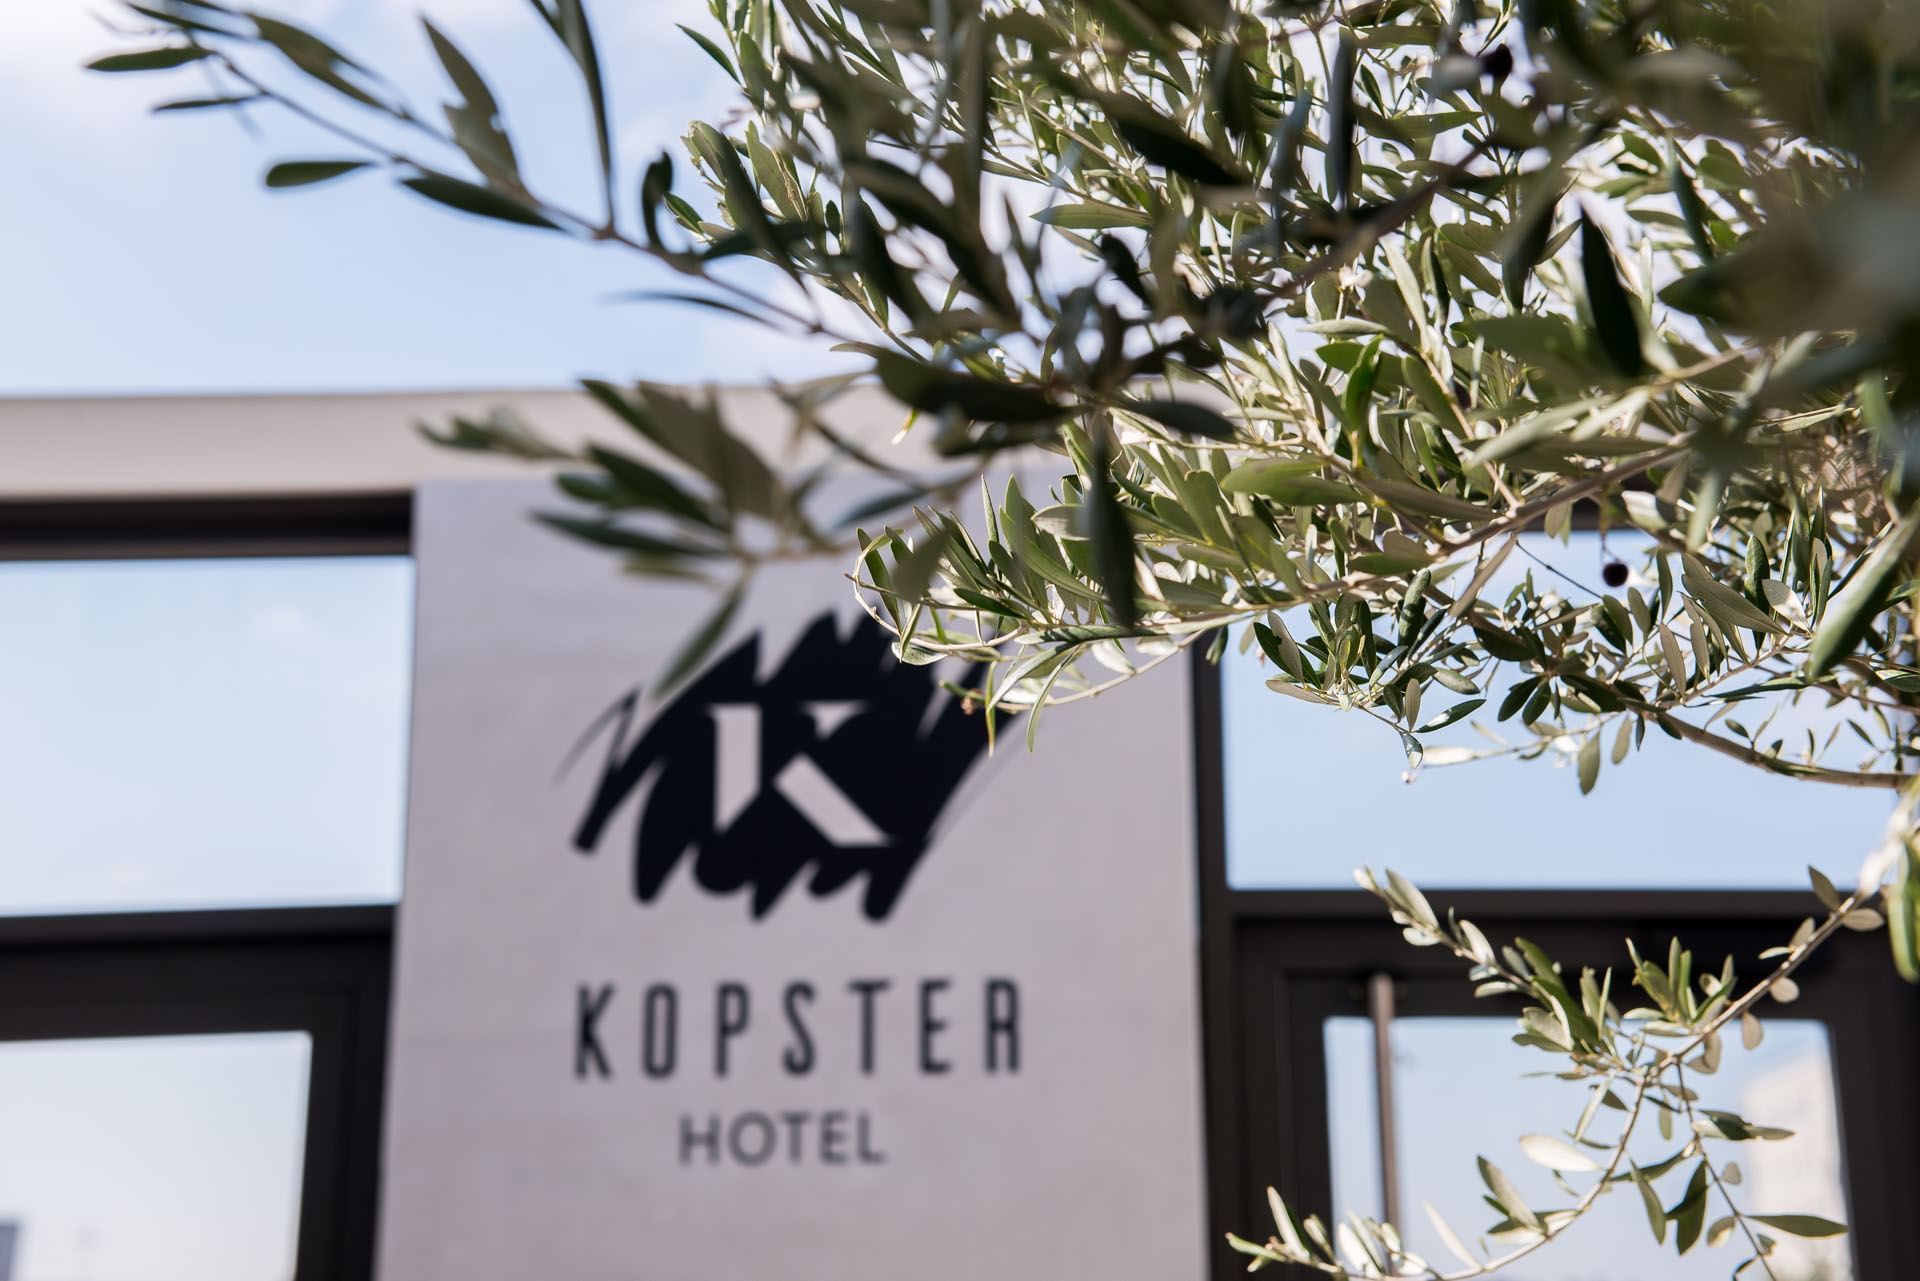 Kopster Hotel sign on a wall at Kopster Hotel Lyon Groupama Stadium